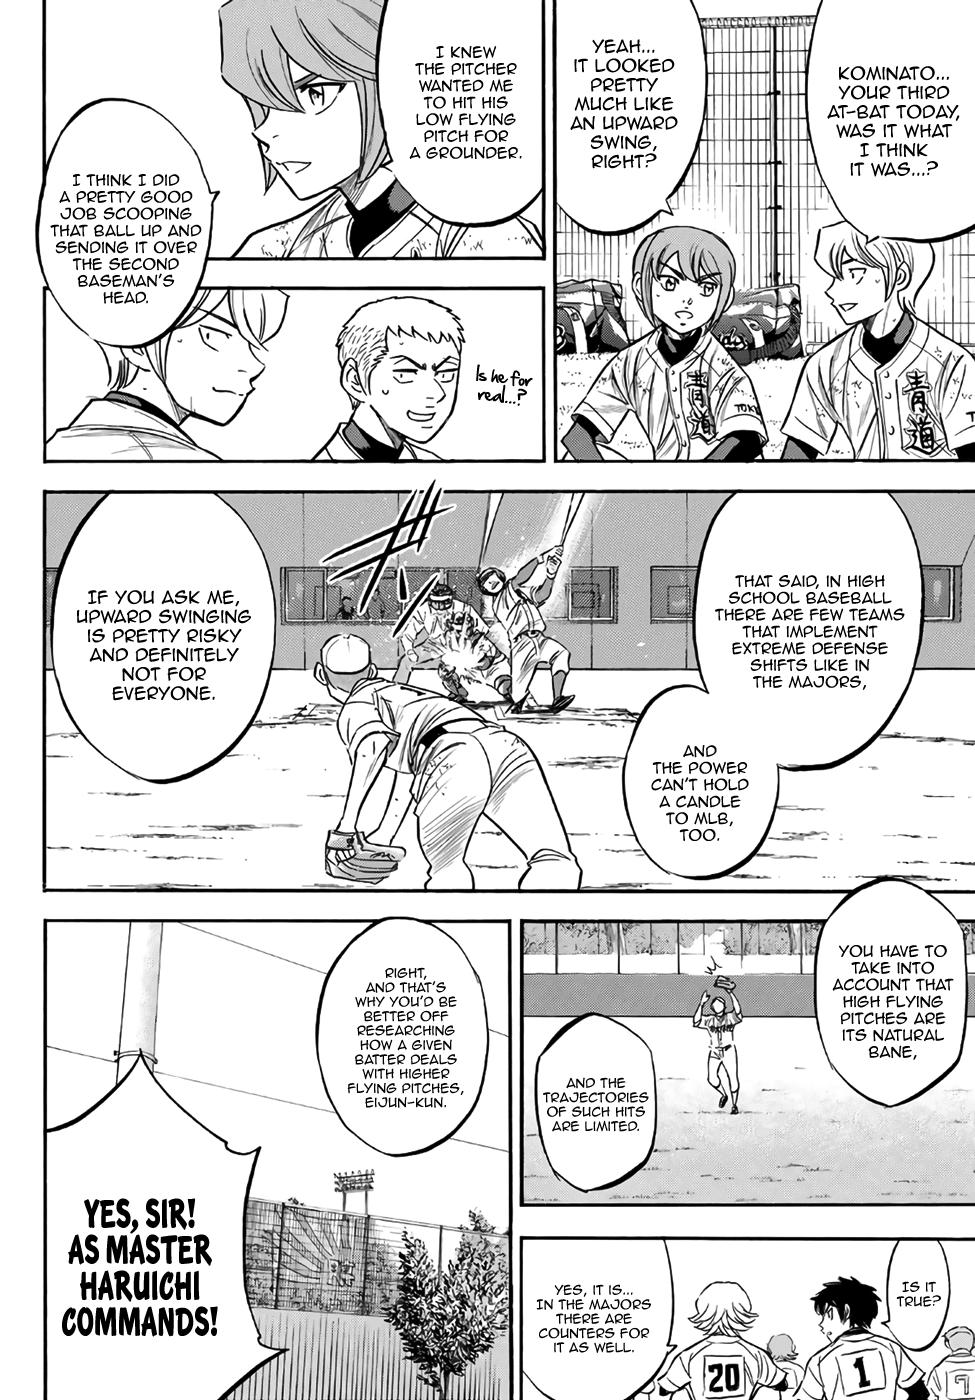 ACE OF DIAMOND act II Vol. 31 Yuji Terajima Japanese Baseball Comic Manga  ダイヤのA